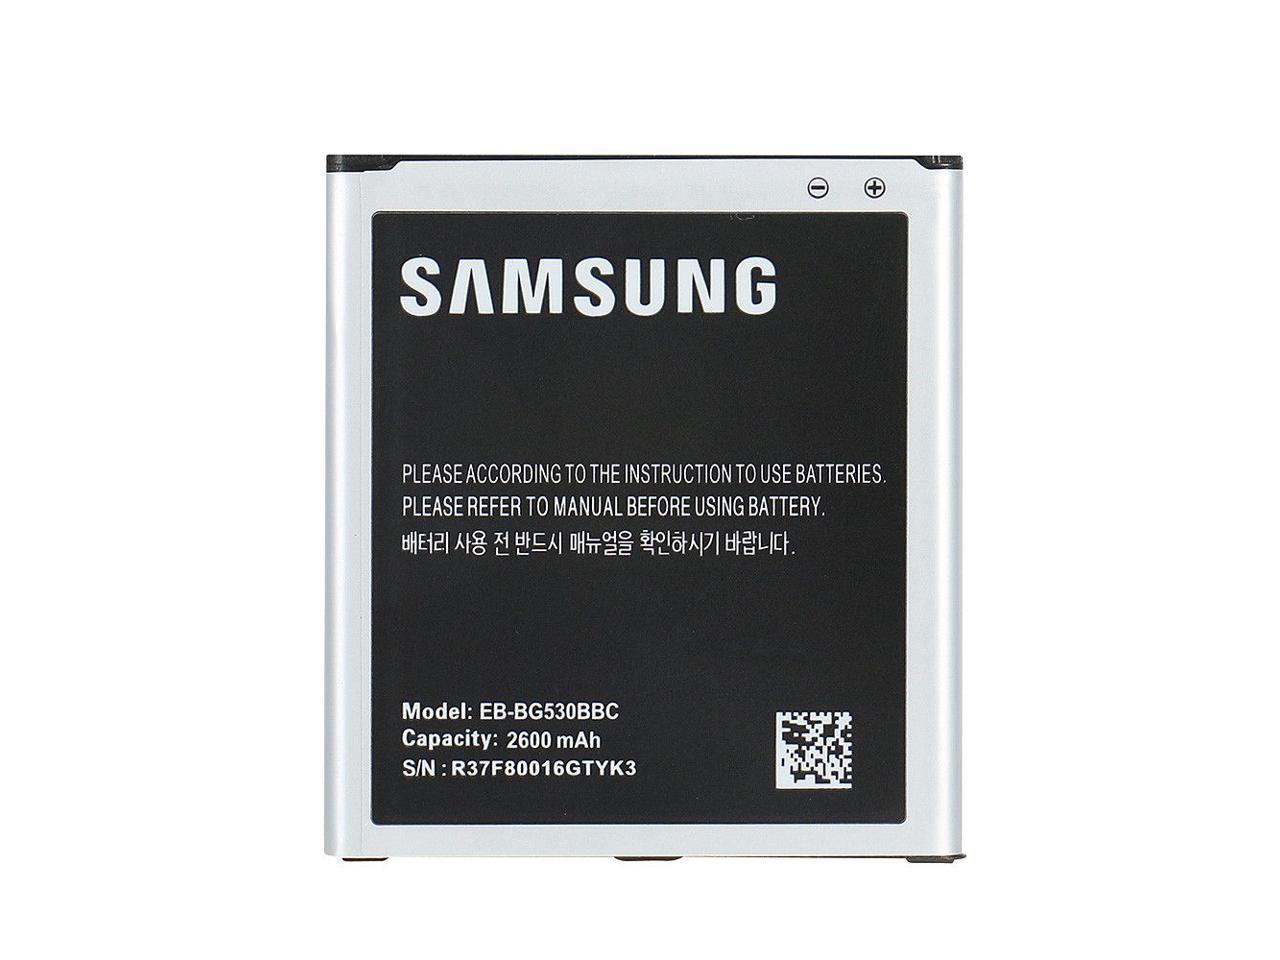 Samsung batteries. АКБ Samsung g530. Samsung Galaxy j2 Prime аккумулятор. АКБ Samsung g531.